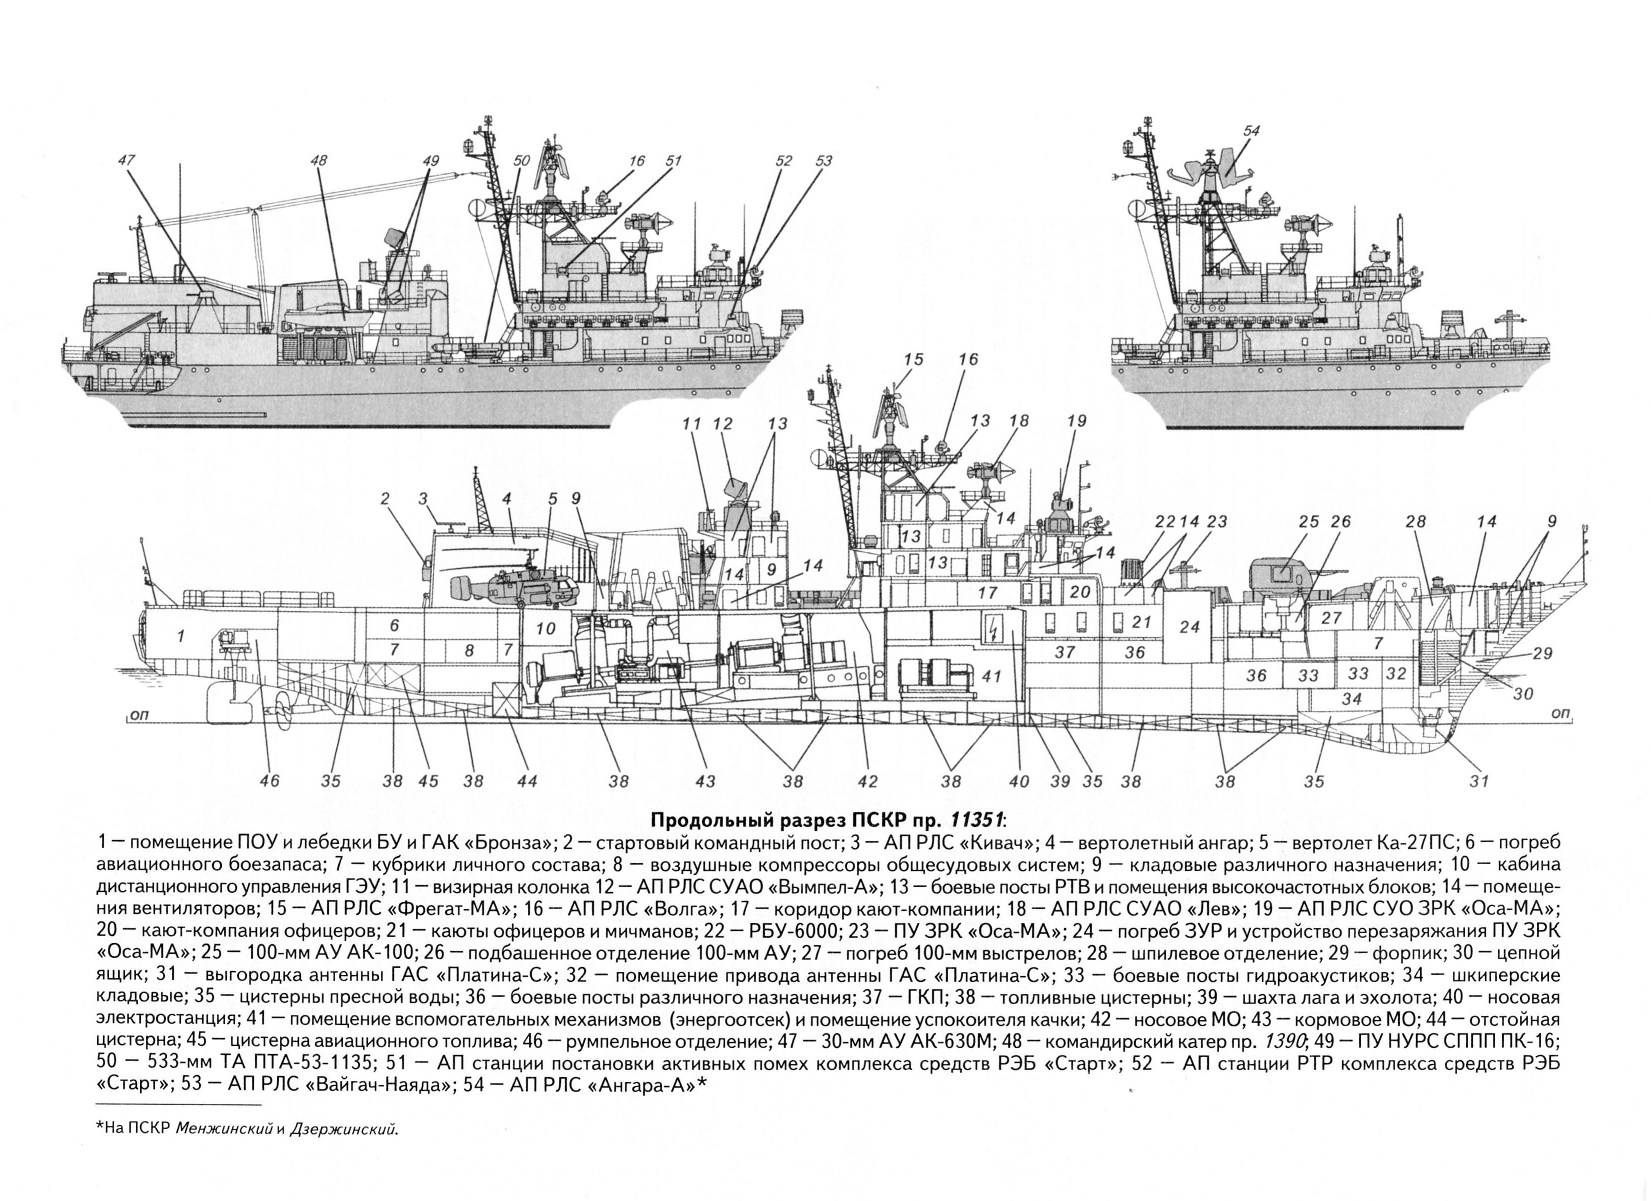 Фрегат типа "кривак" - krivak-class frigate